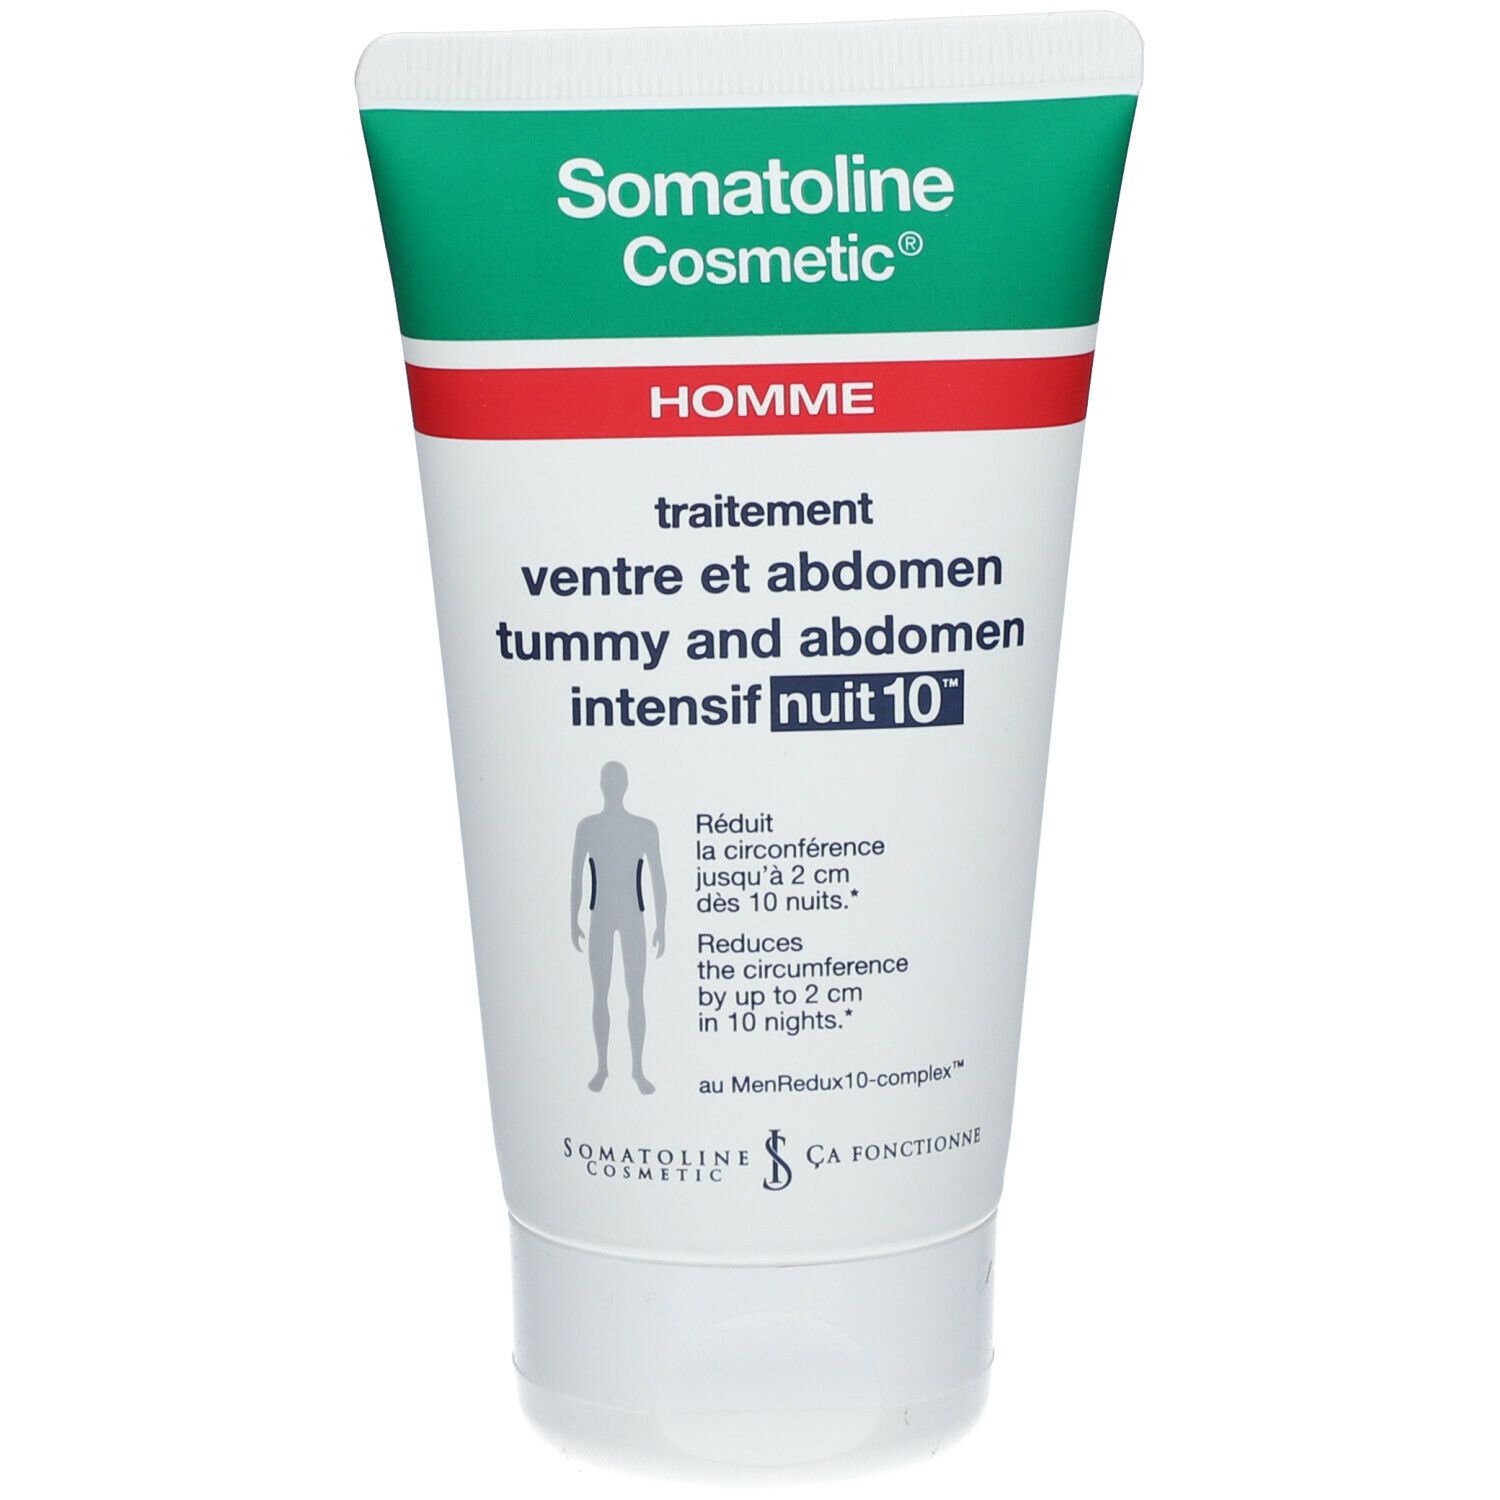 Somatoline Cosmetic® Homme traitement intensif nuit ventre et abdomen